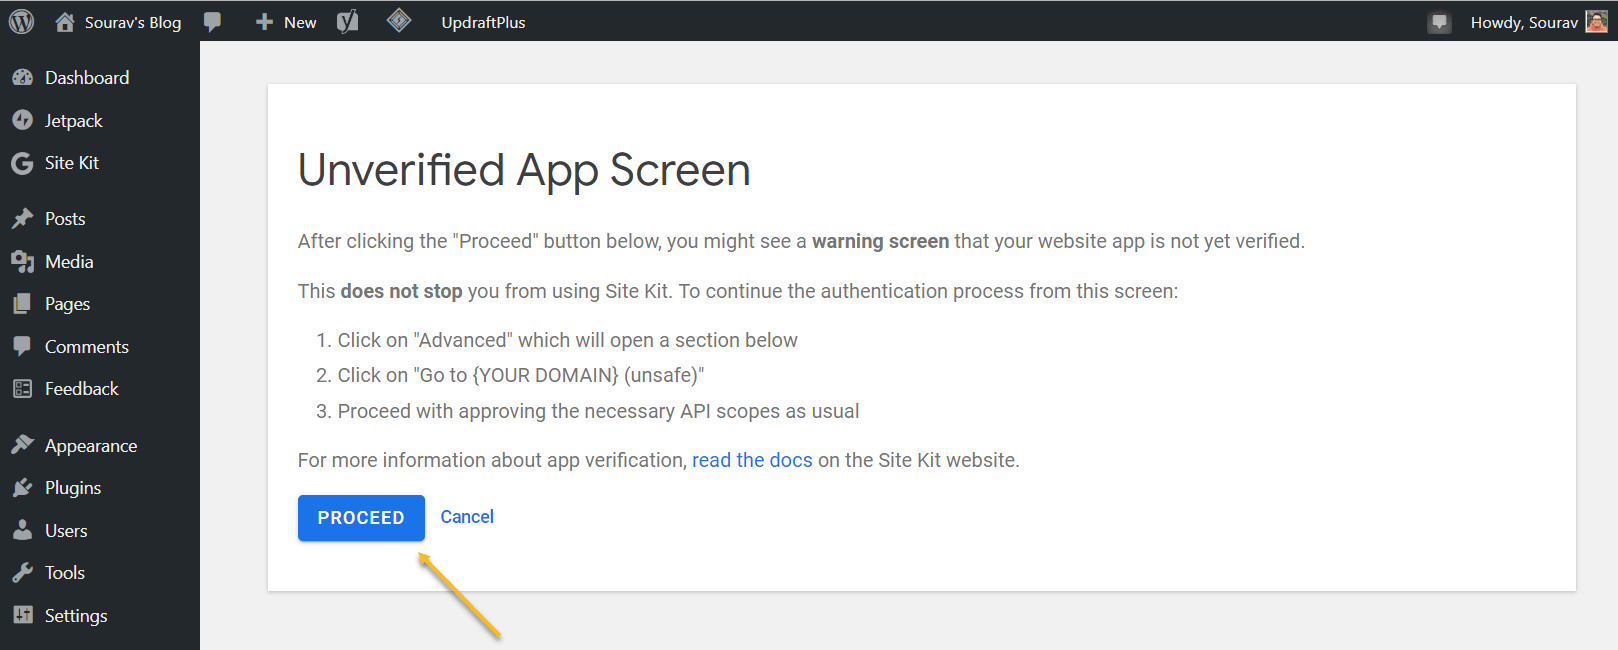 Site Kit unverified app screen message on WordPress